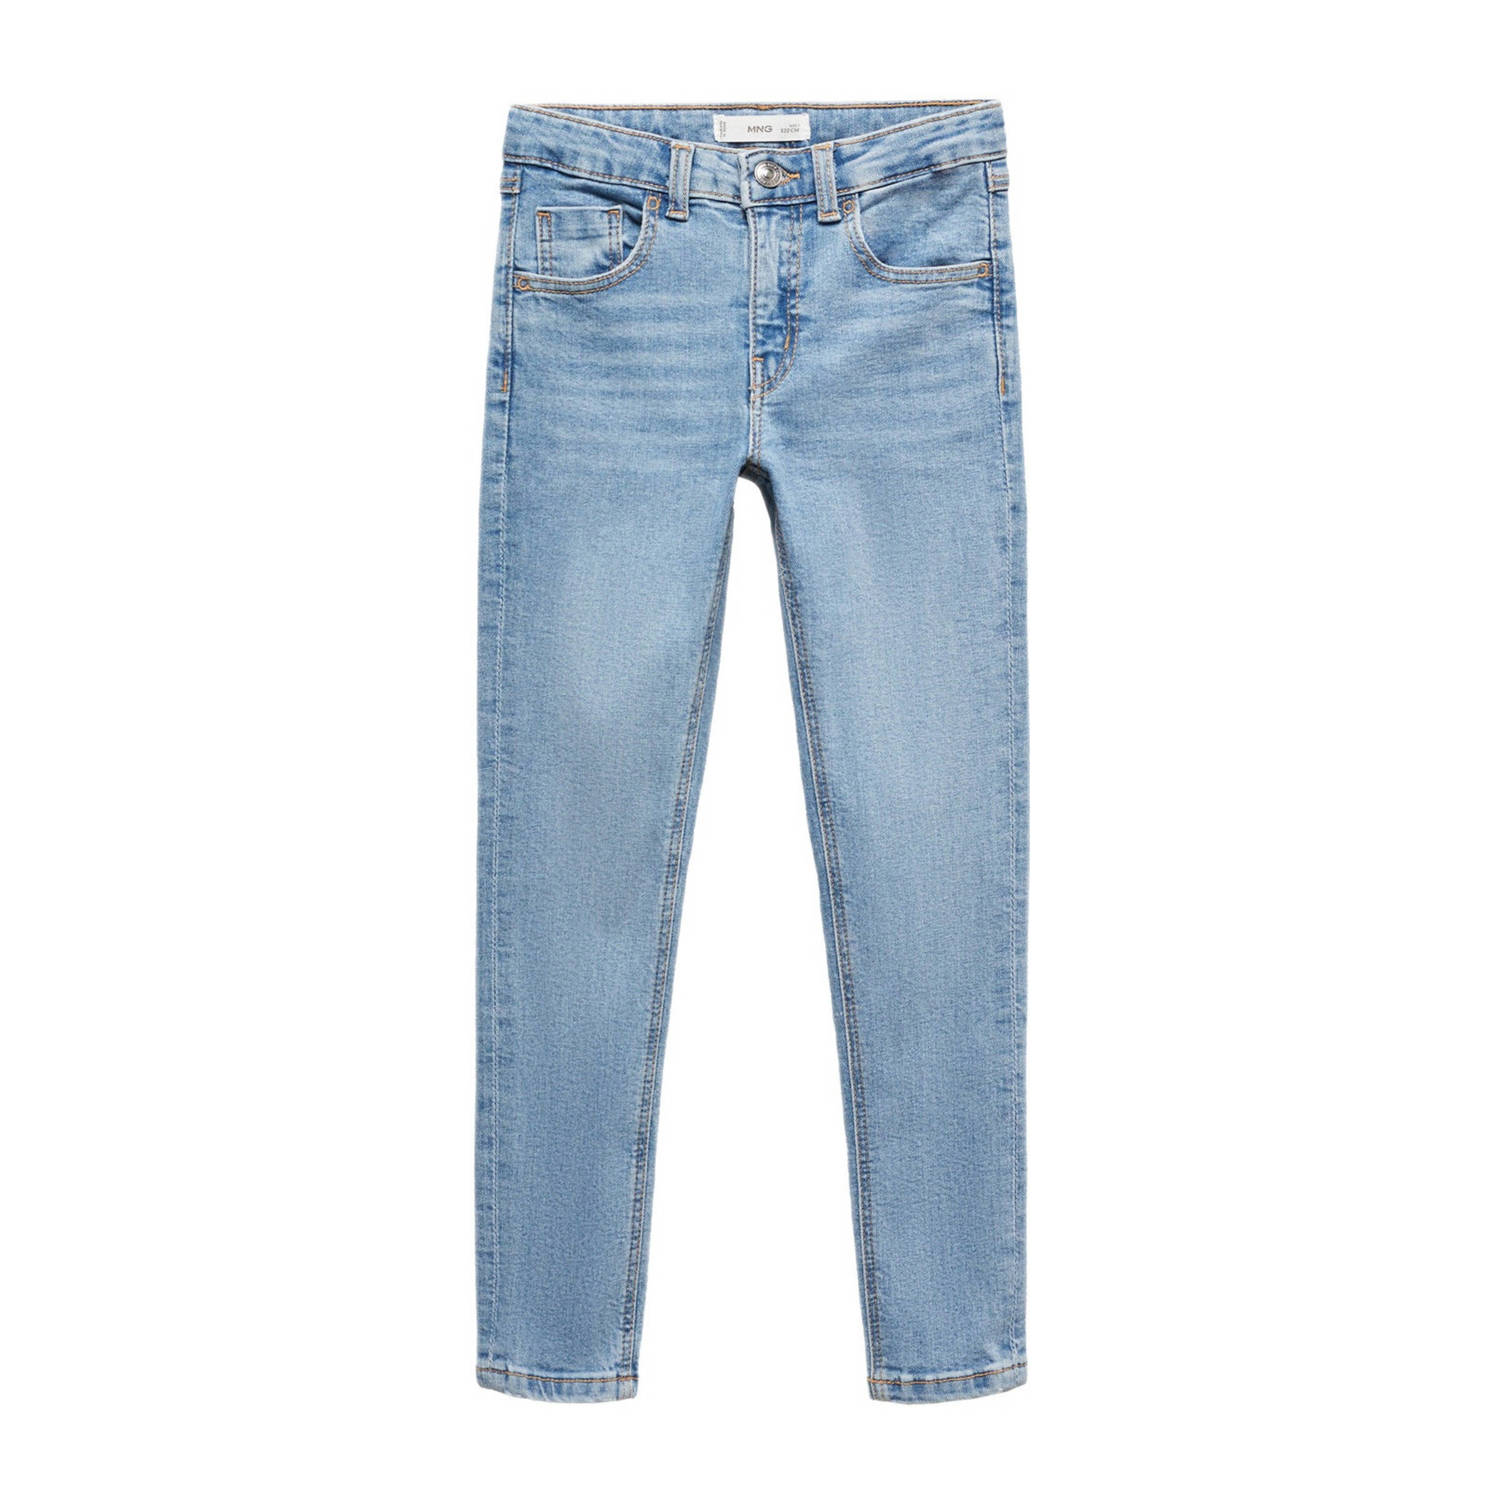 Mango Kids skinny jeans light blue denim Blauw Meisjes Stretchdenim Effen 122